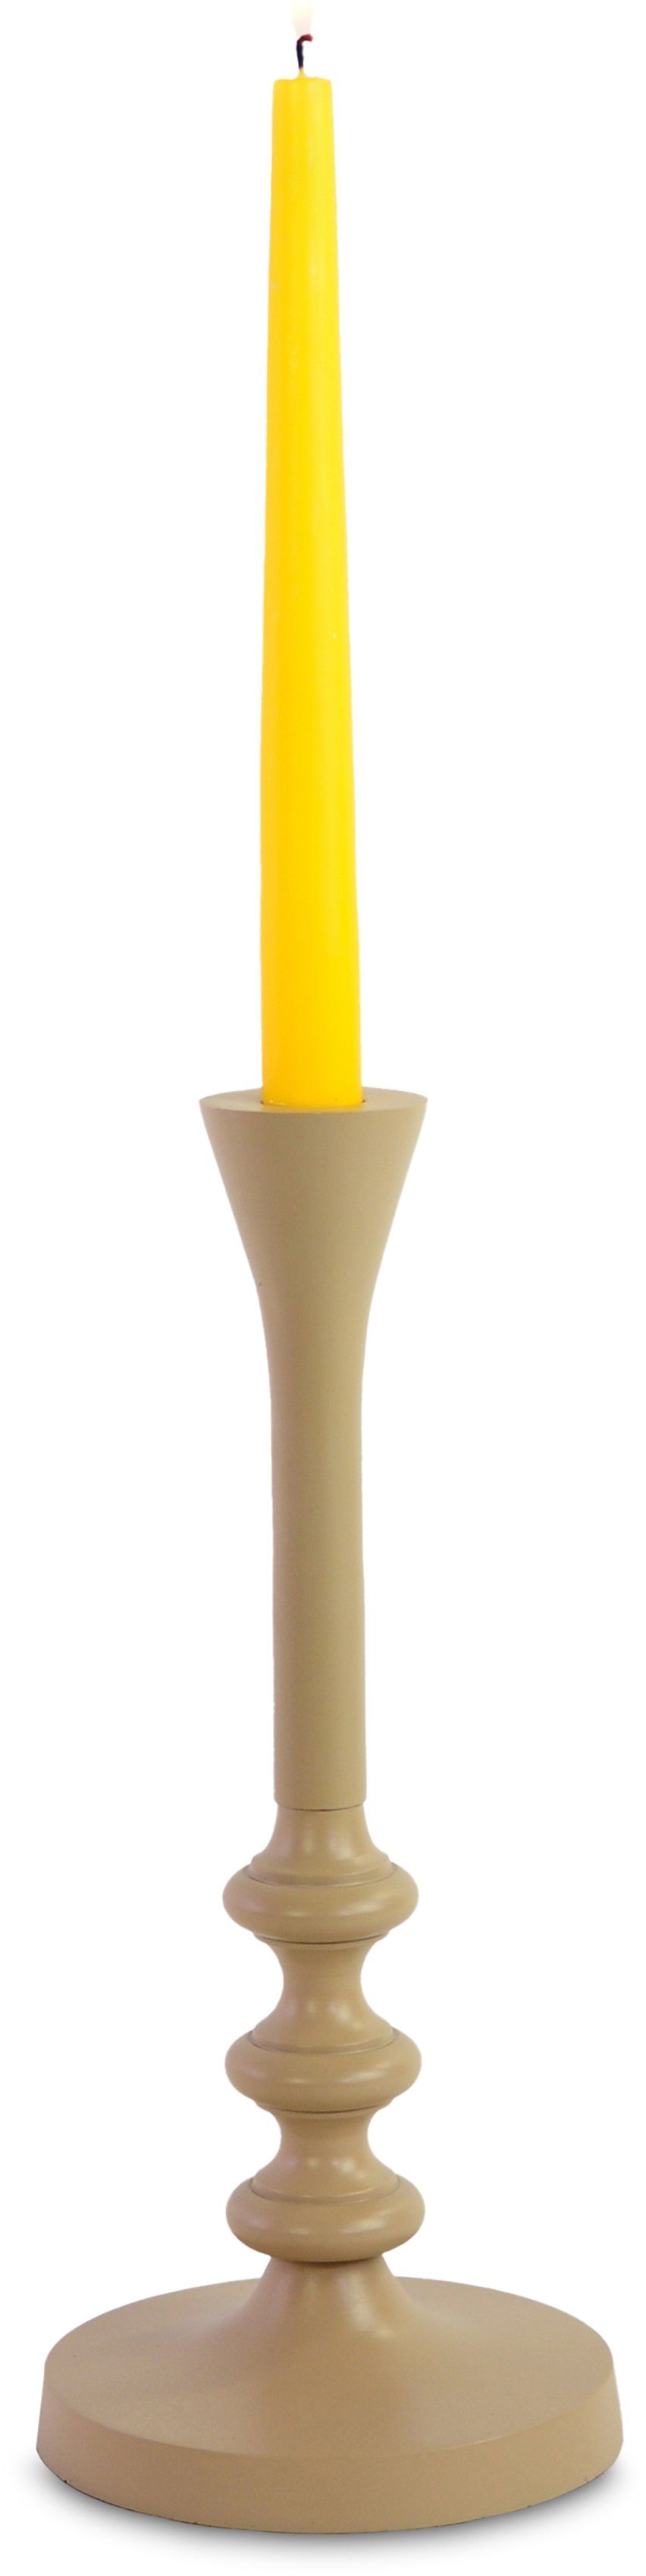 RIFFELMACHER & WEINBERGER Kerzenhalter Höhe Weihnachtsdeko, aus Kerzenständer, Aluminium, grau matt, cm 30 Kerzenleuchter